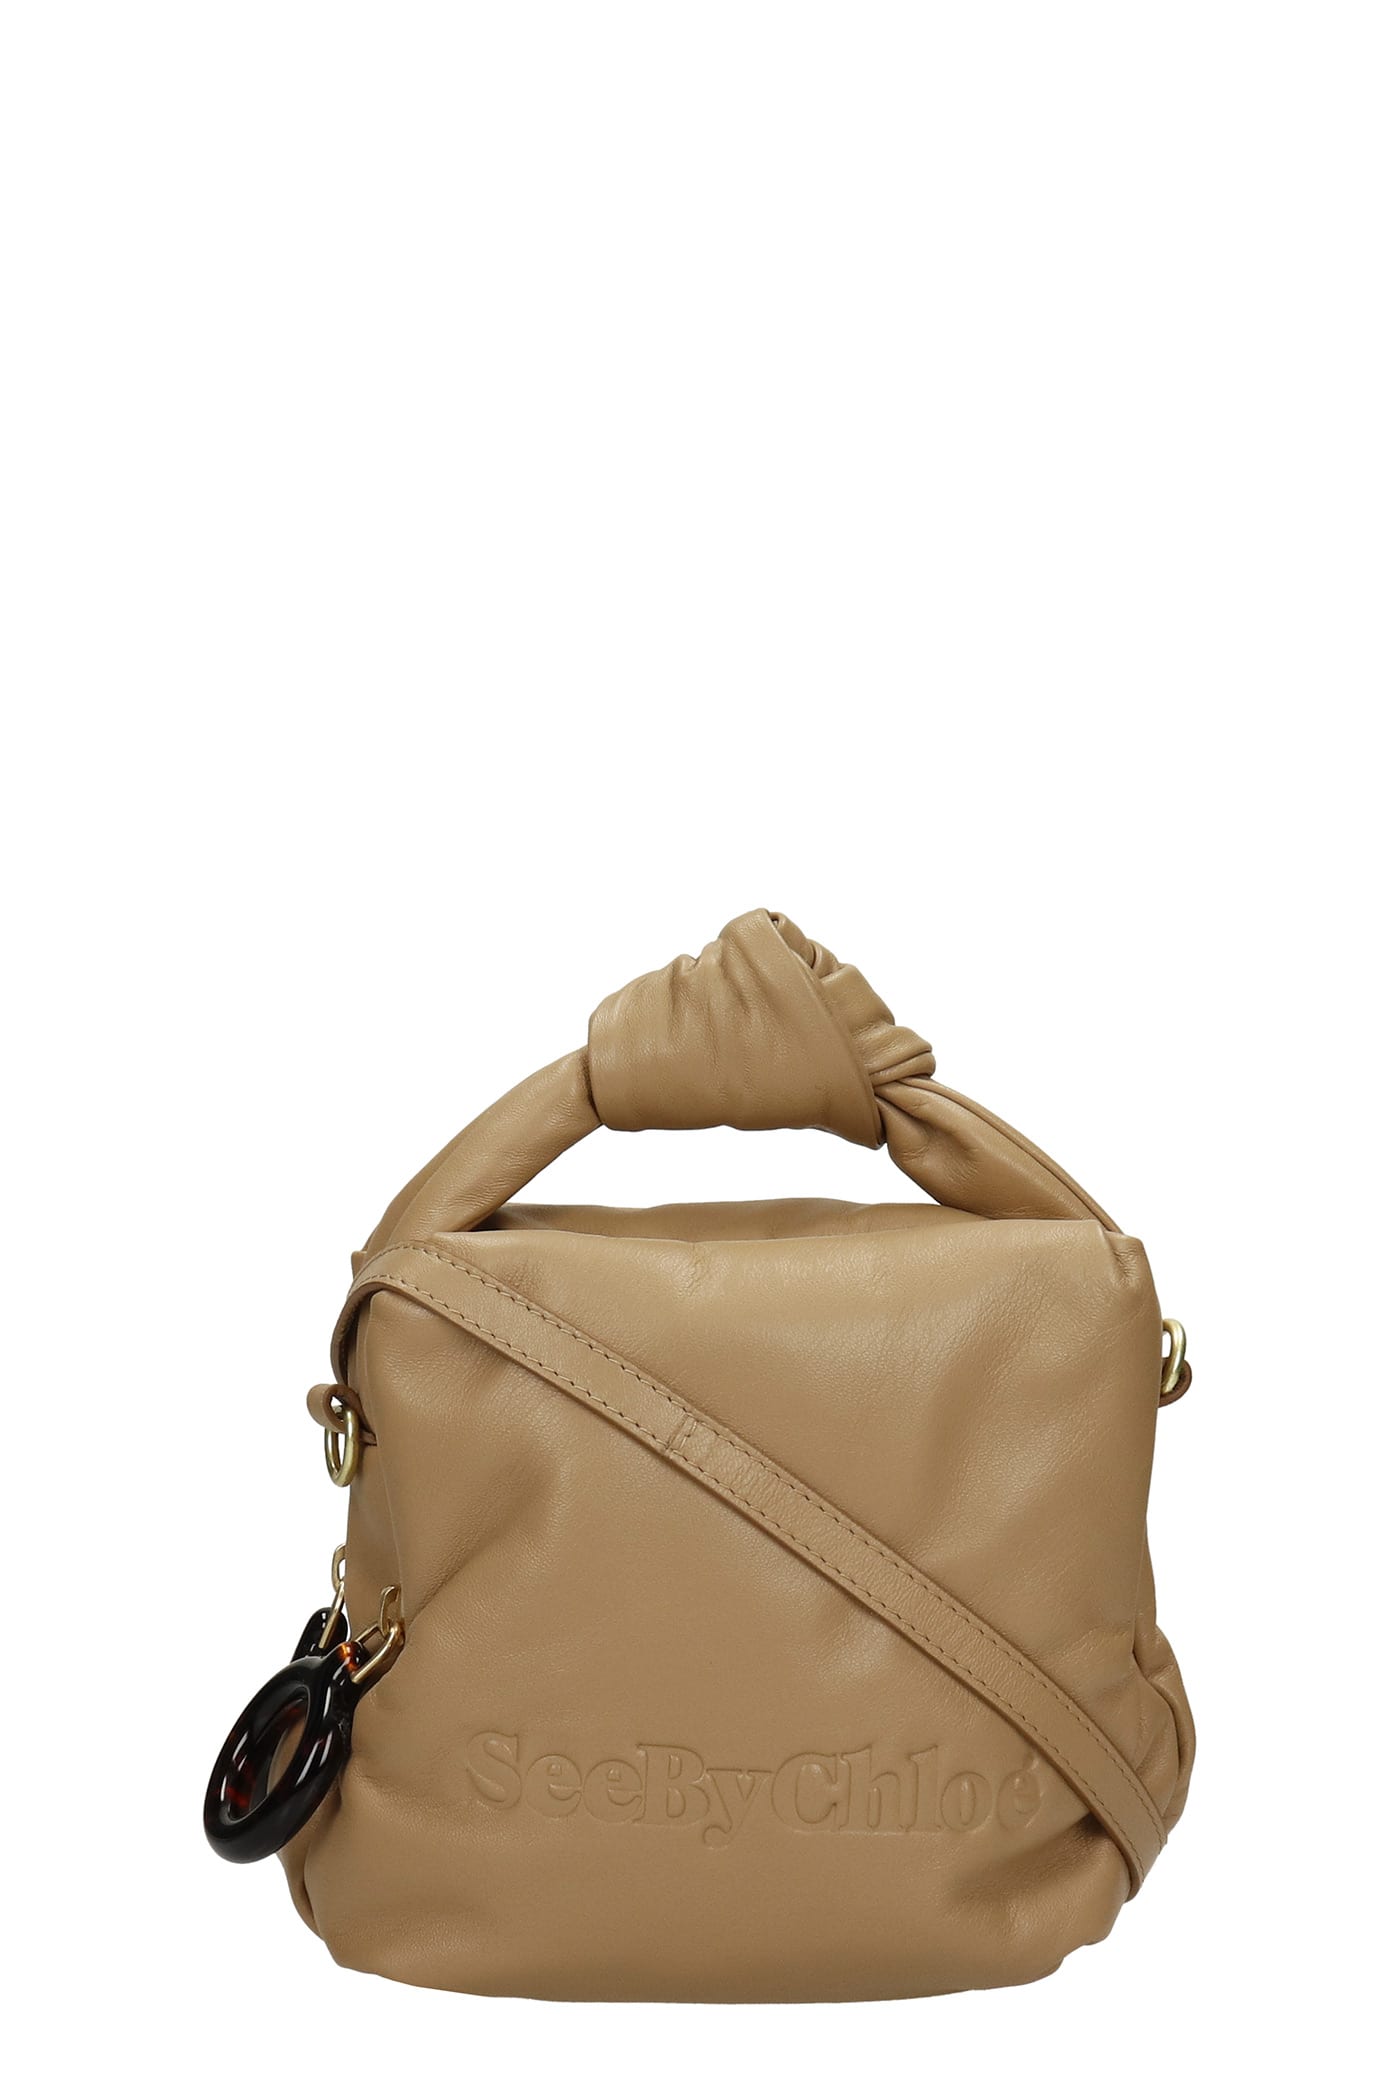 See by Chloé Tilly Shoulder Bag In Beige Leather